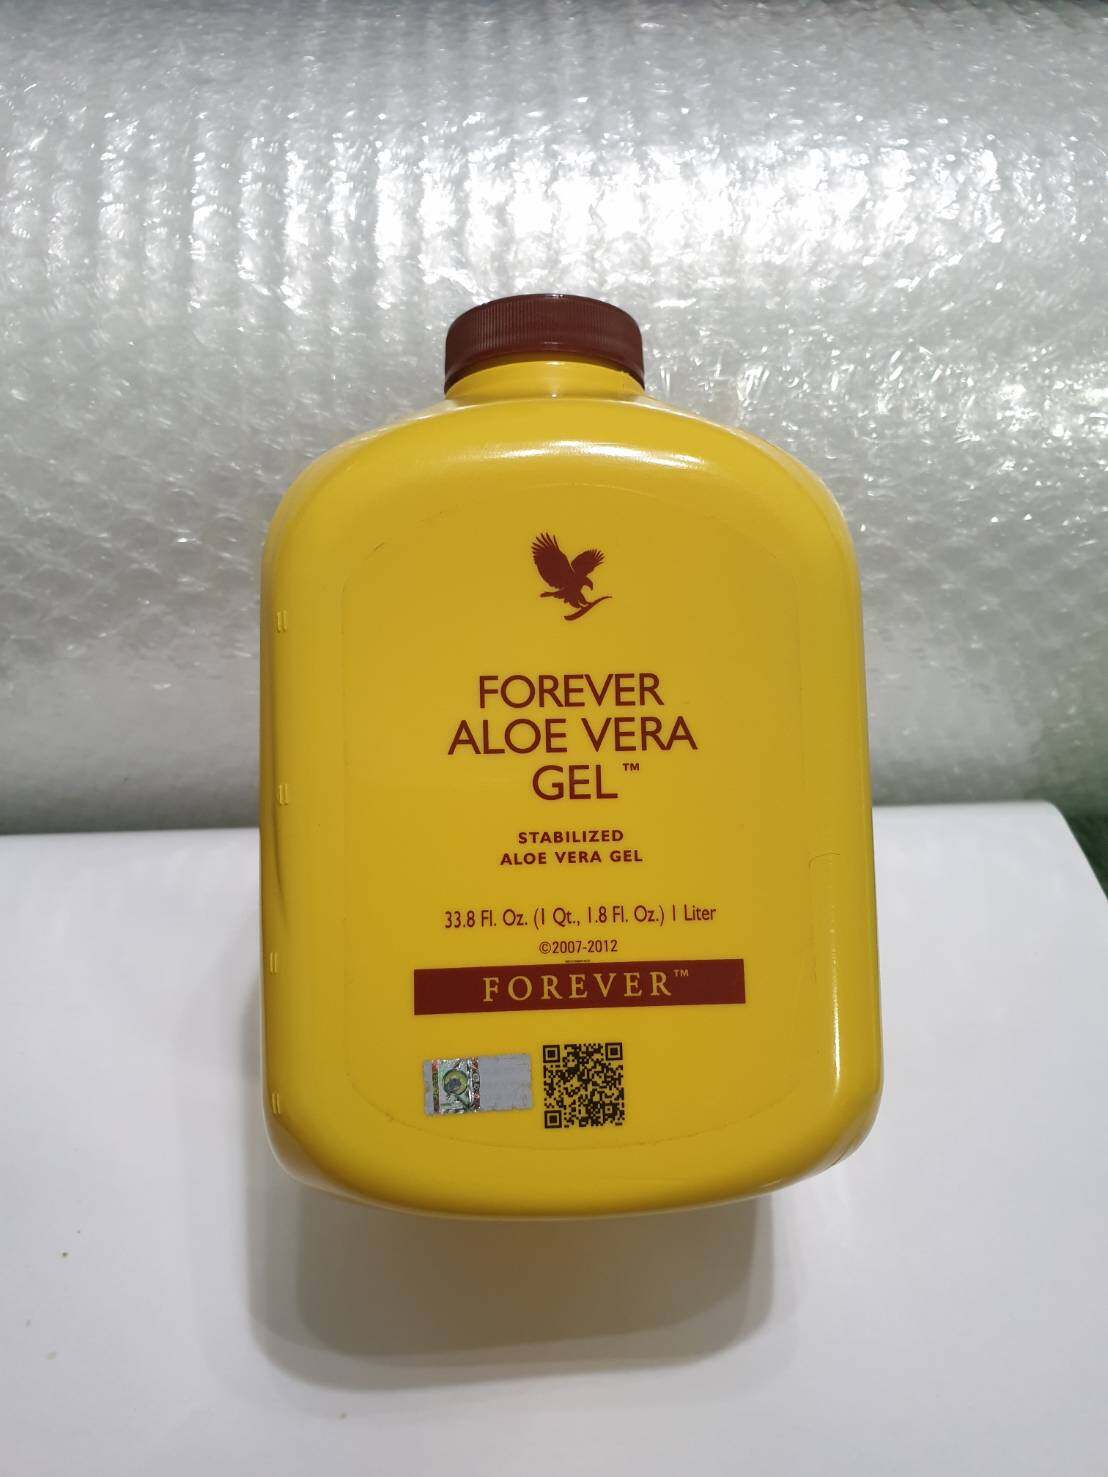 Aloe Vera Gel Forever น้ำว่านหางจระเข้ ฟอร์เอเวอร์ อะโรเวร่า ขนาด 1000 ml. ของแท้ 100% (สินค้านำเขาจากมาเลเซีย)